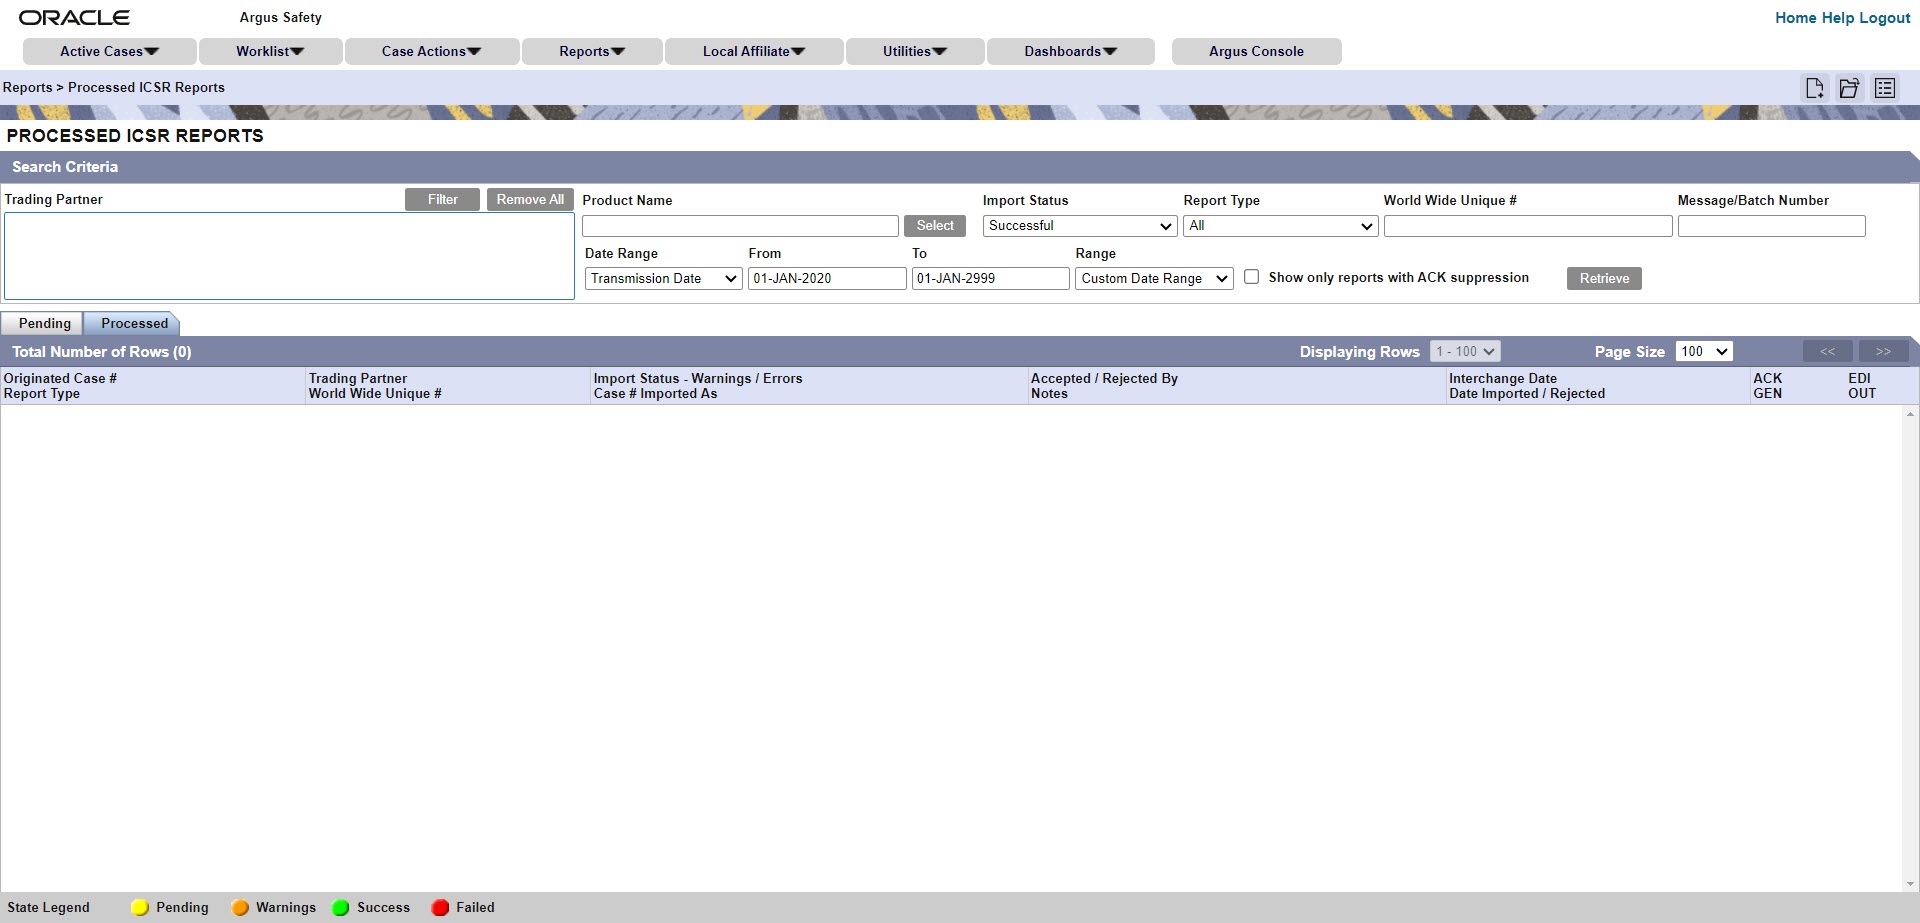 Processed ICSR reports screen